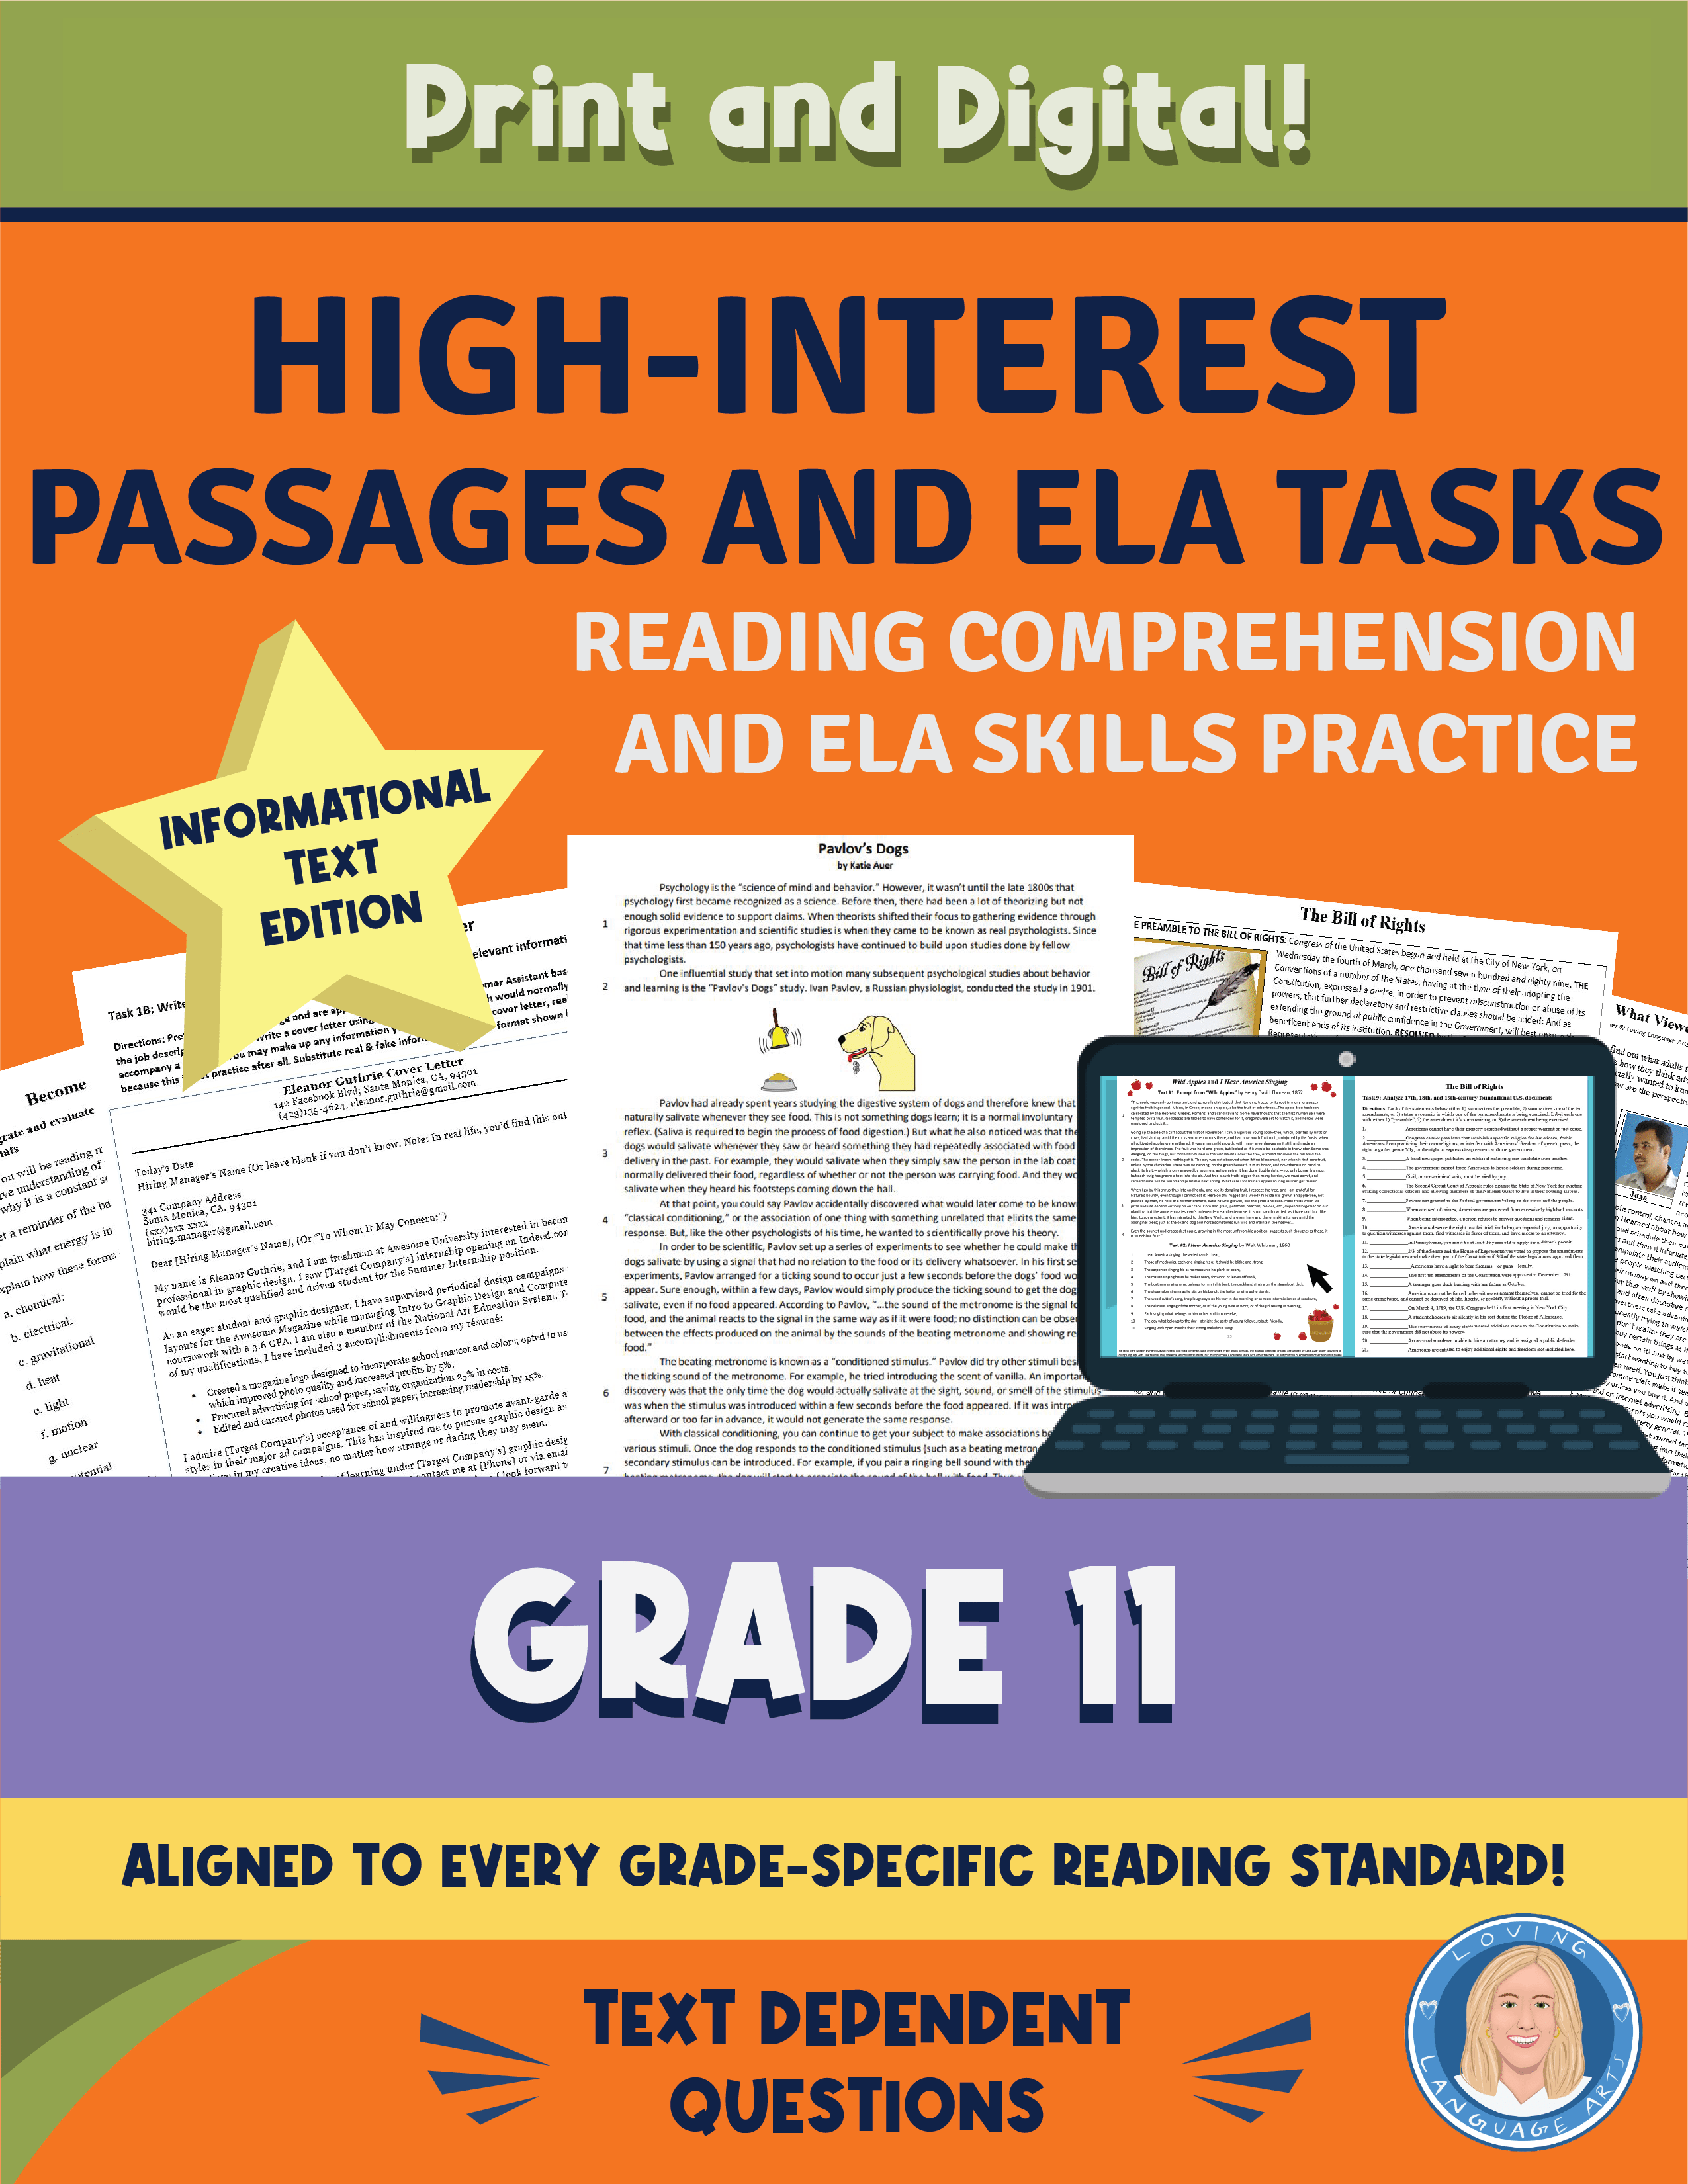 11th grade language arts workbook - High-interest passages and tasks.